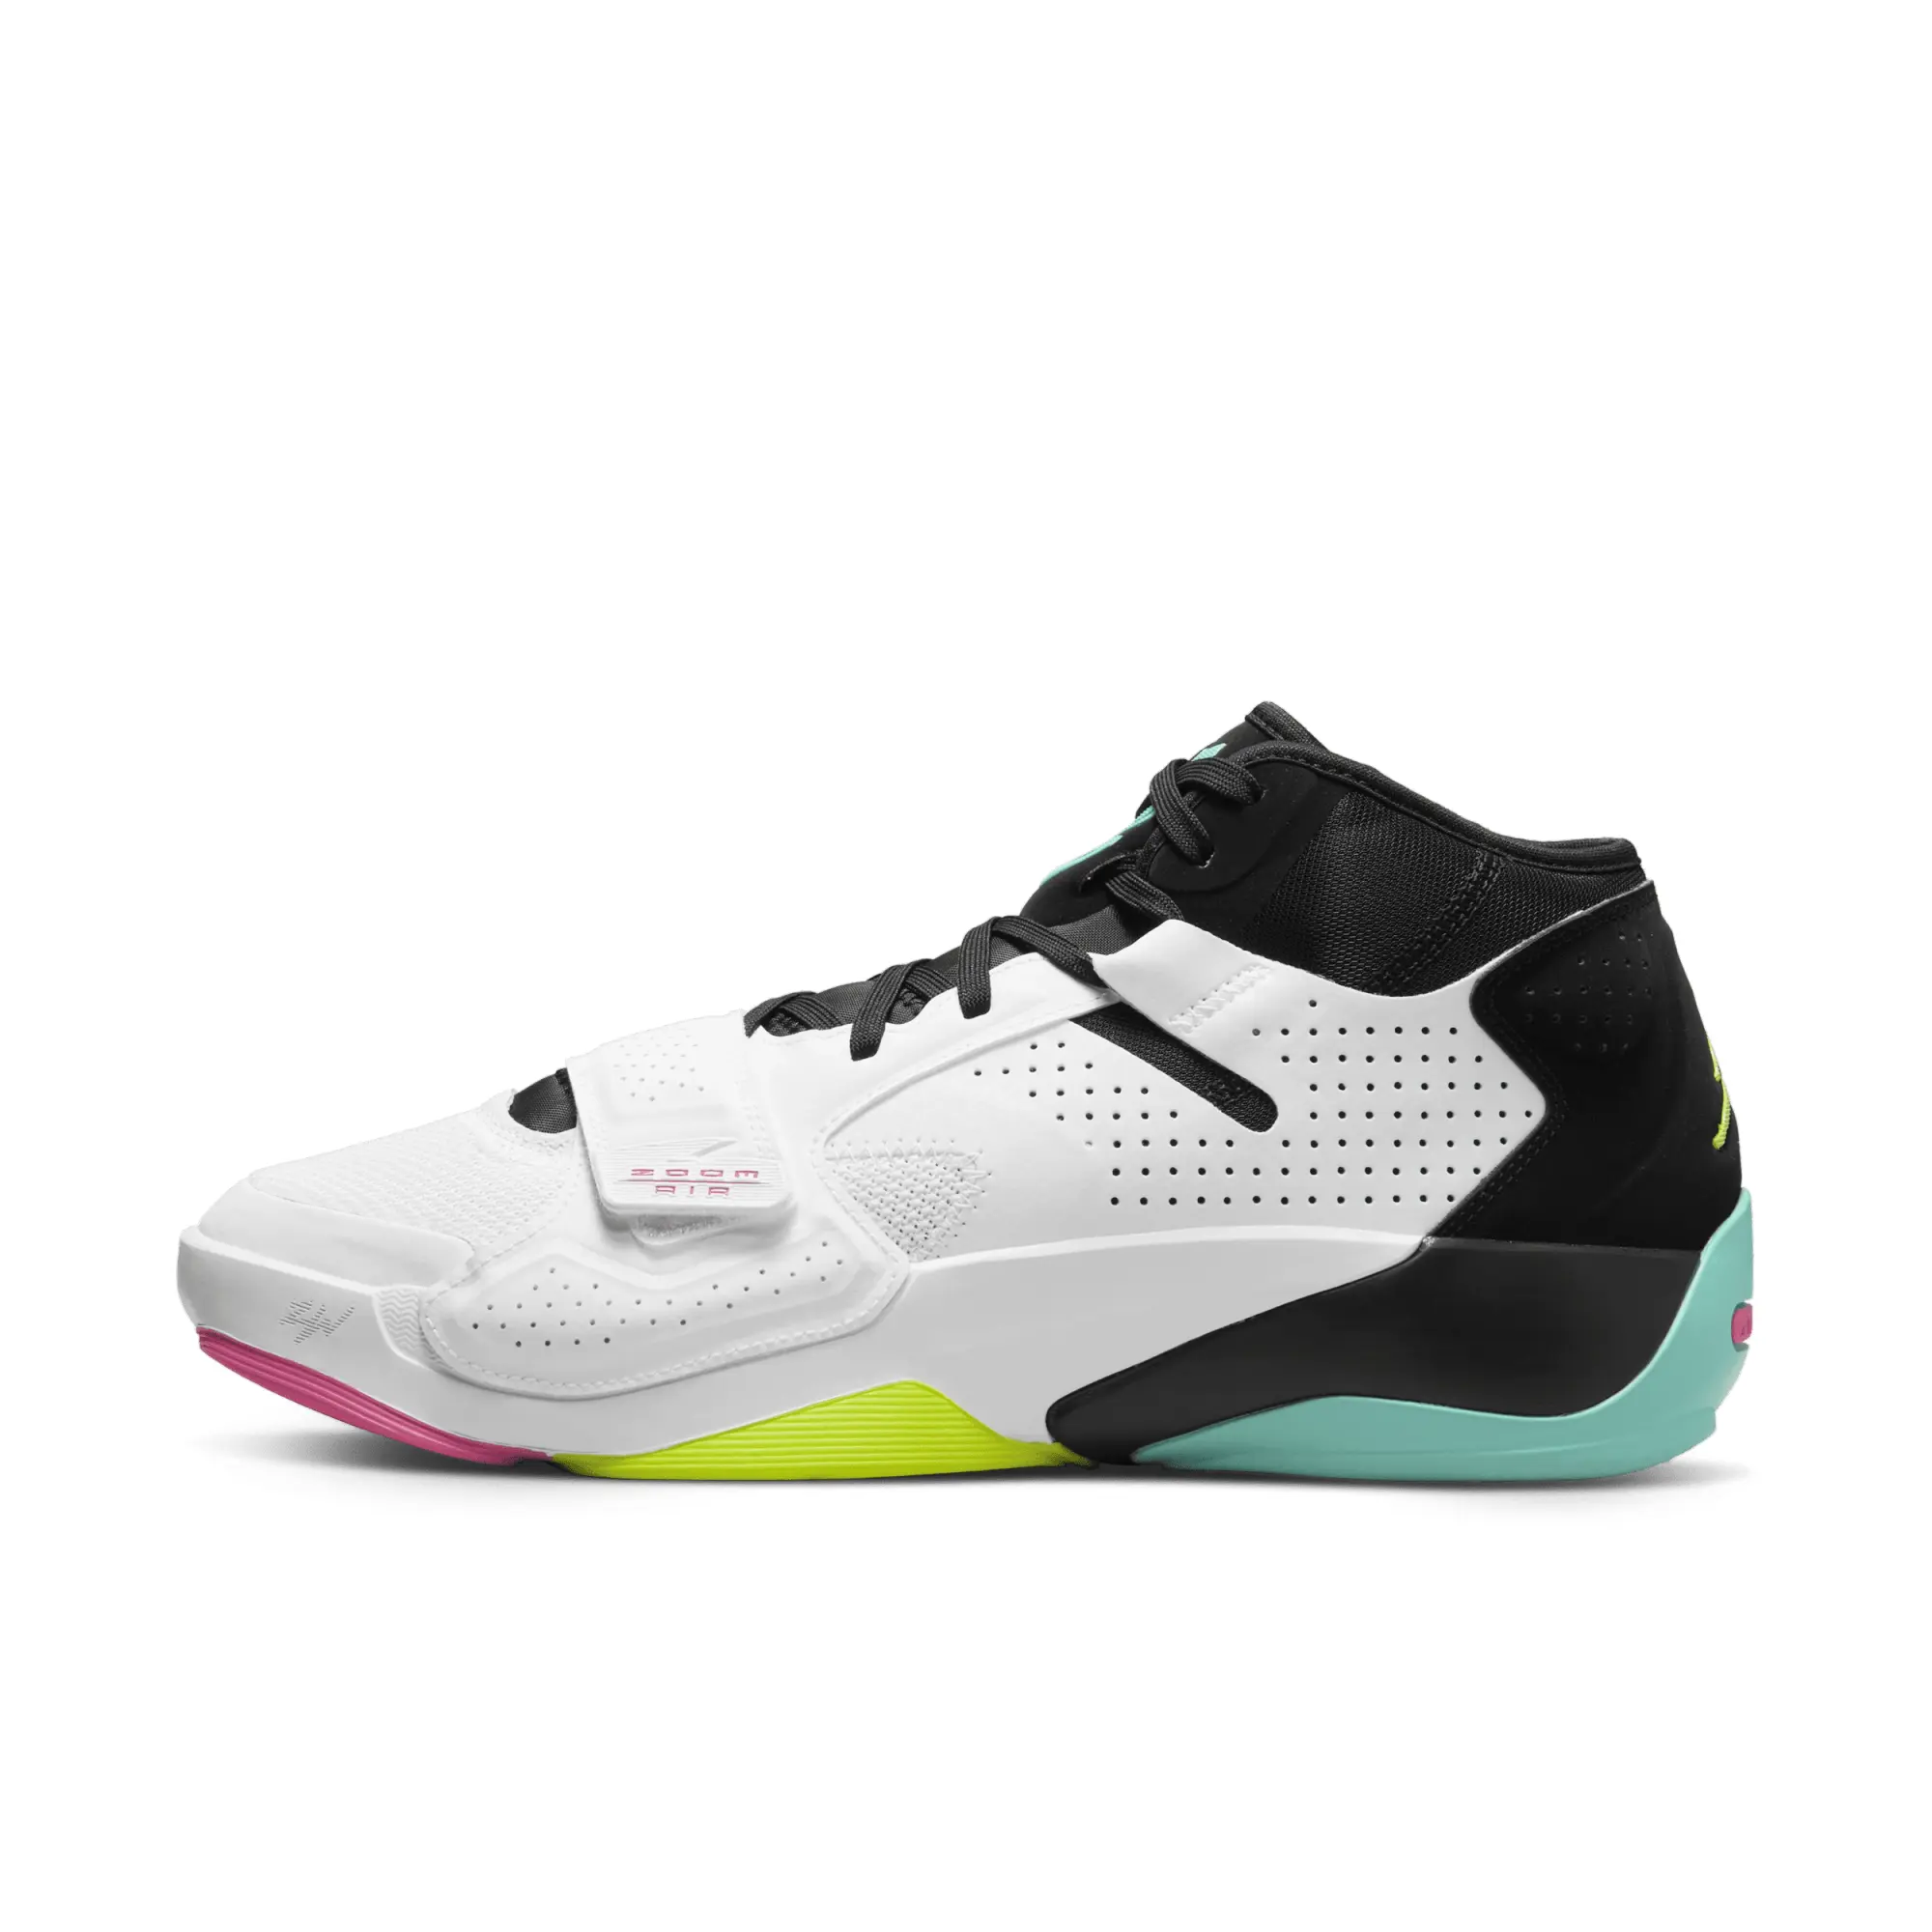 Nike Zion 2 Men's Basketball Shoes - White